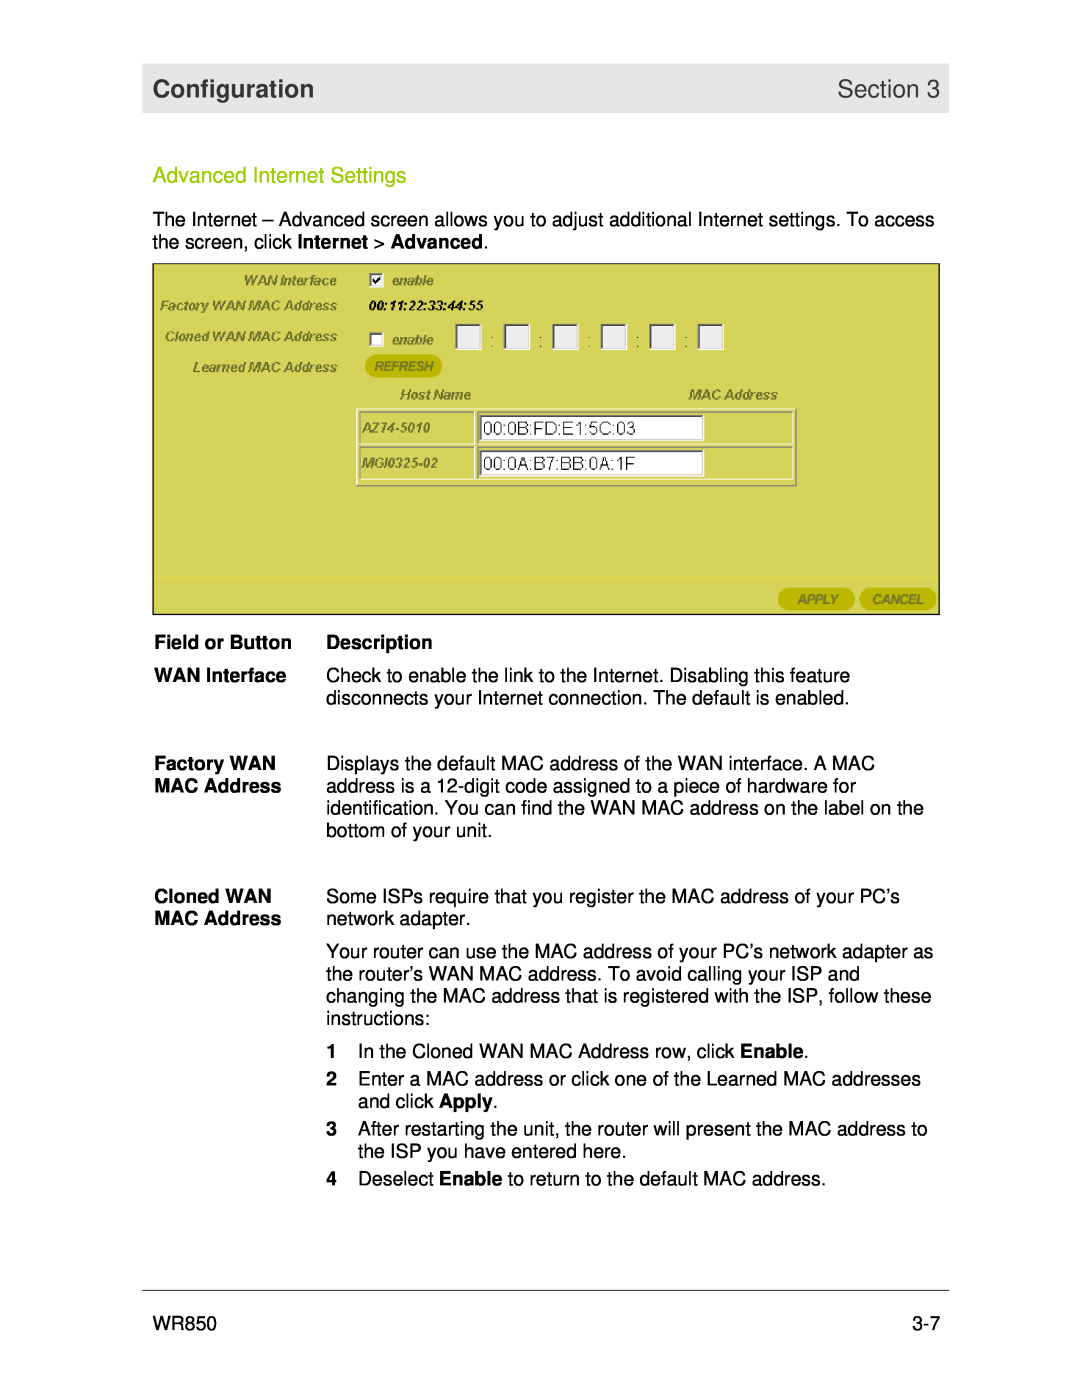 Motorola WR850 manual Advanced Internet Settings, Configuration, Section 